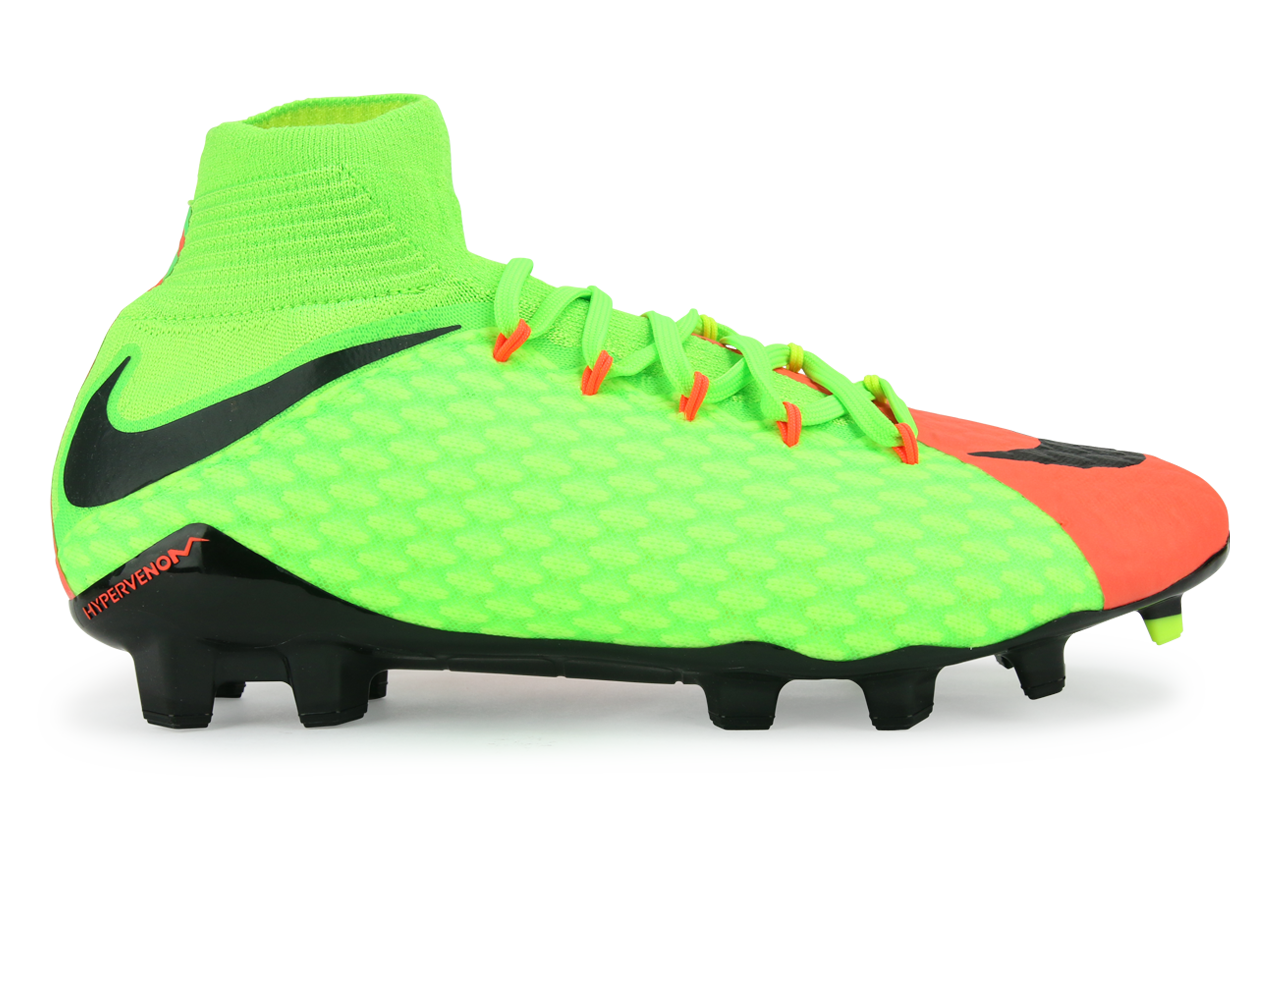 Nike Men's Hypervenom Phatal III Dynamic Fit FG Electric Green/Black/Hyper Orange